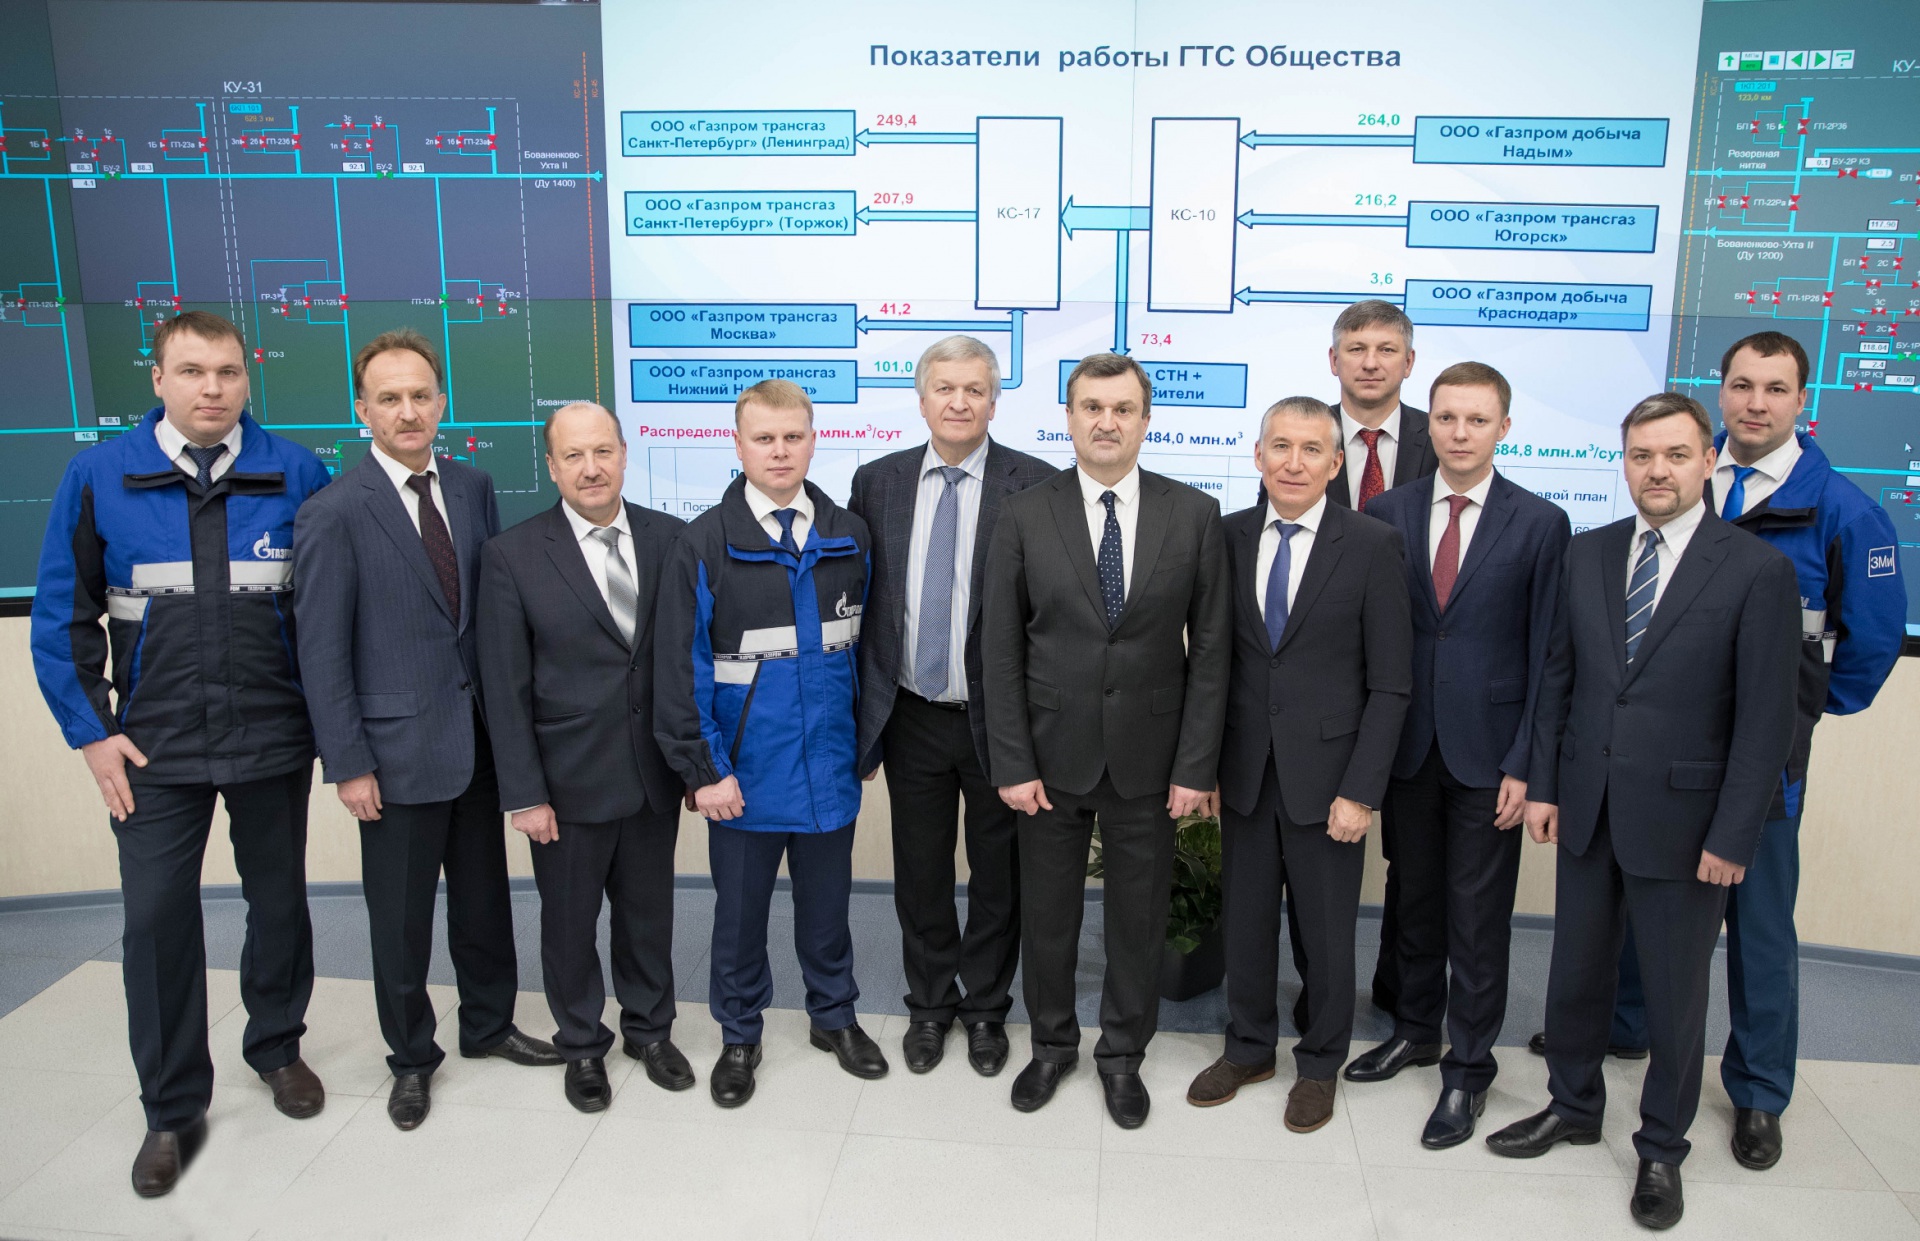 Nikolai-Gerasimov-predstaviteli-rukovodstva-i-dispetchery-OOO-Gazprom-transgaz-Uhta.jpg